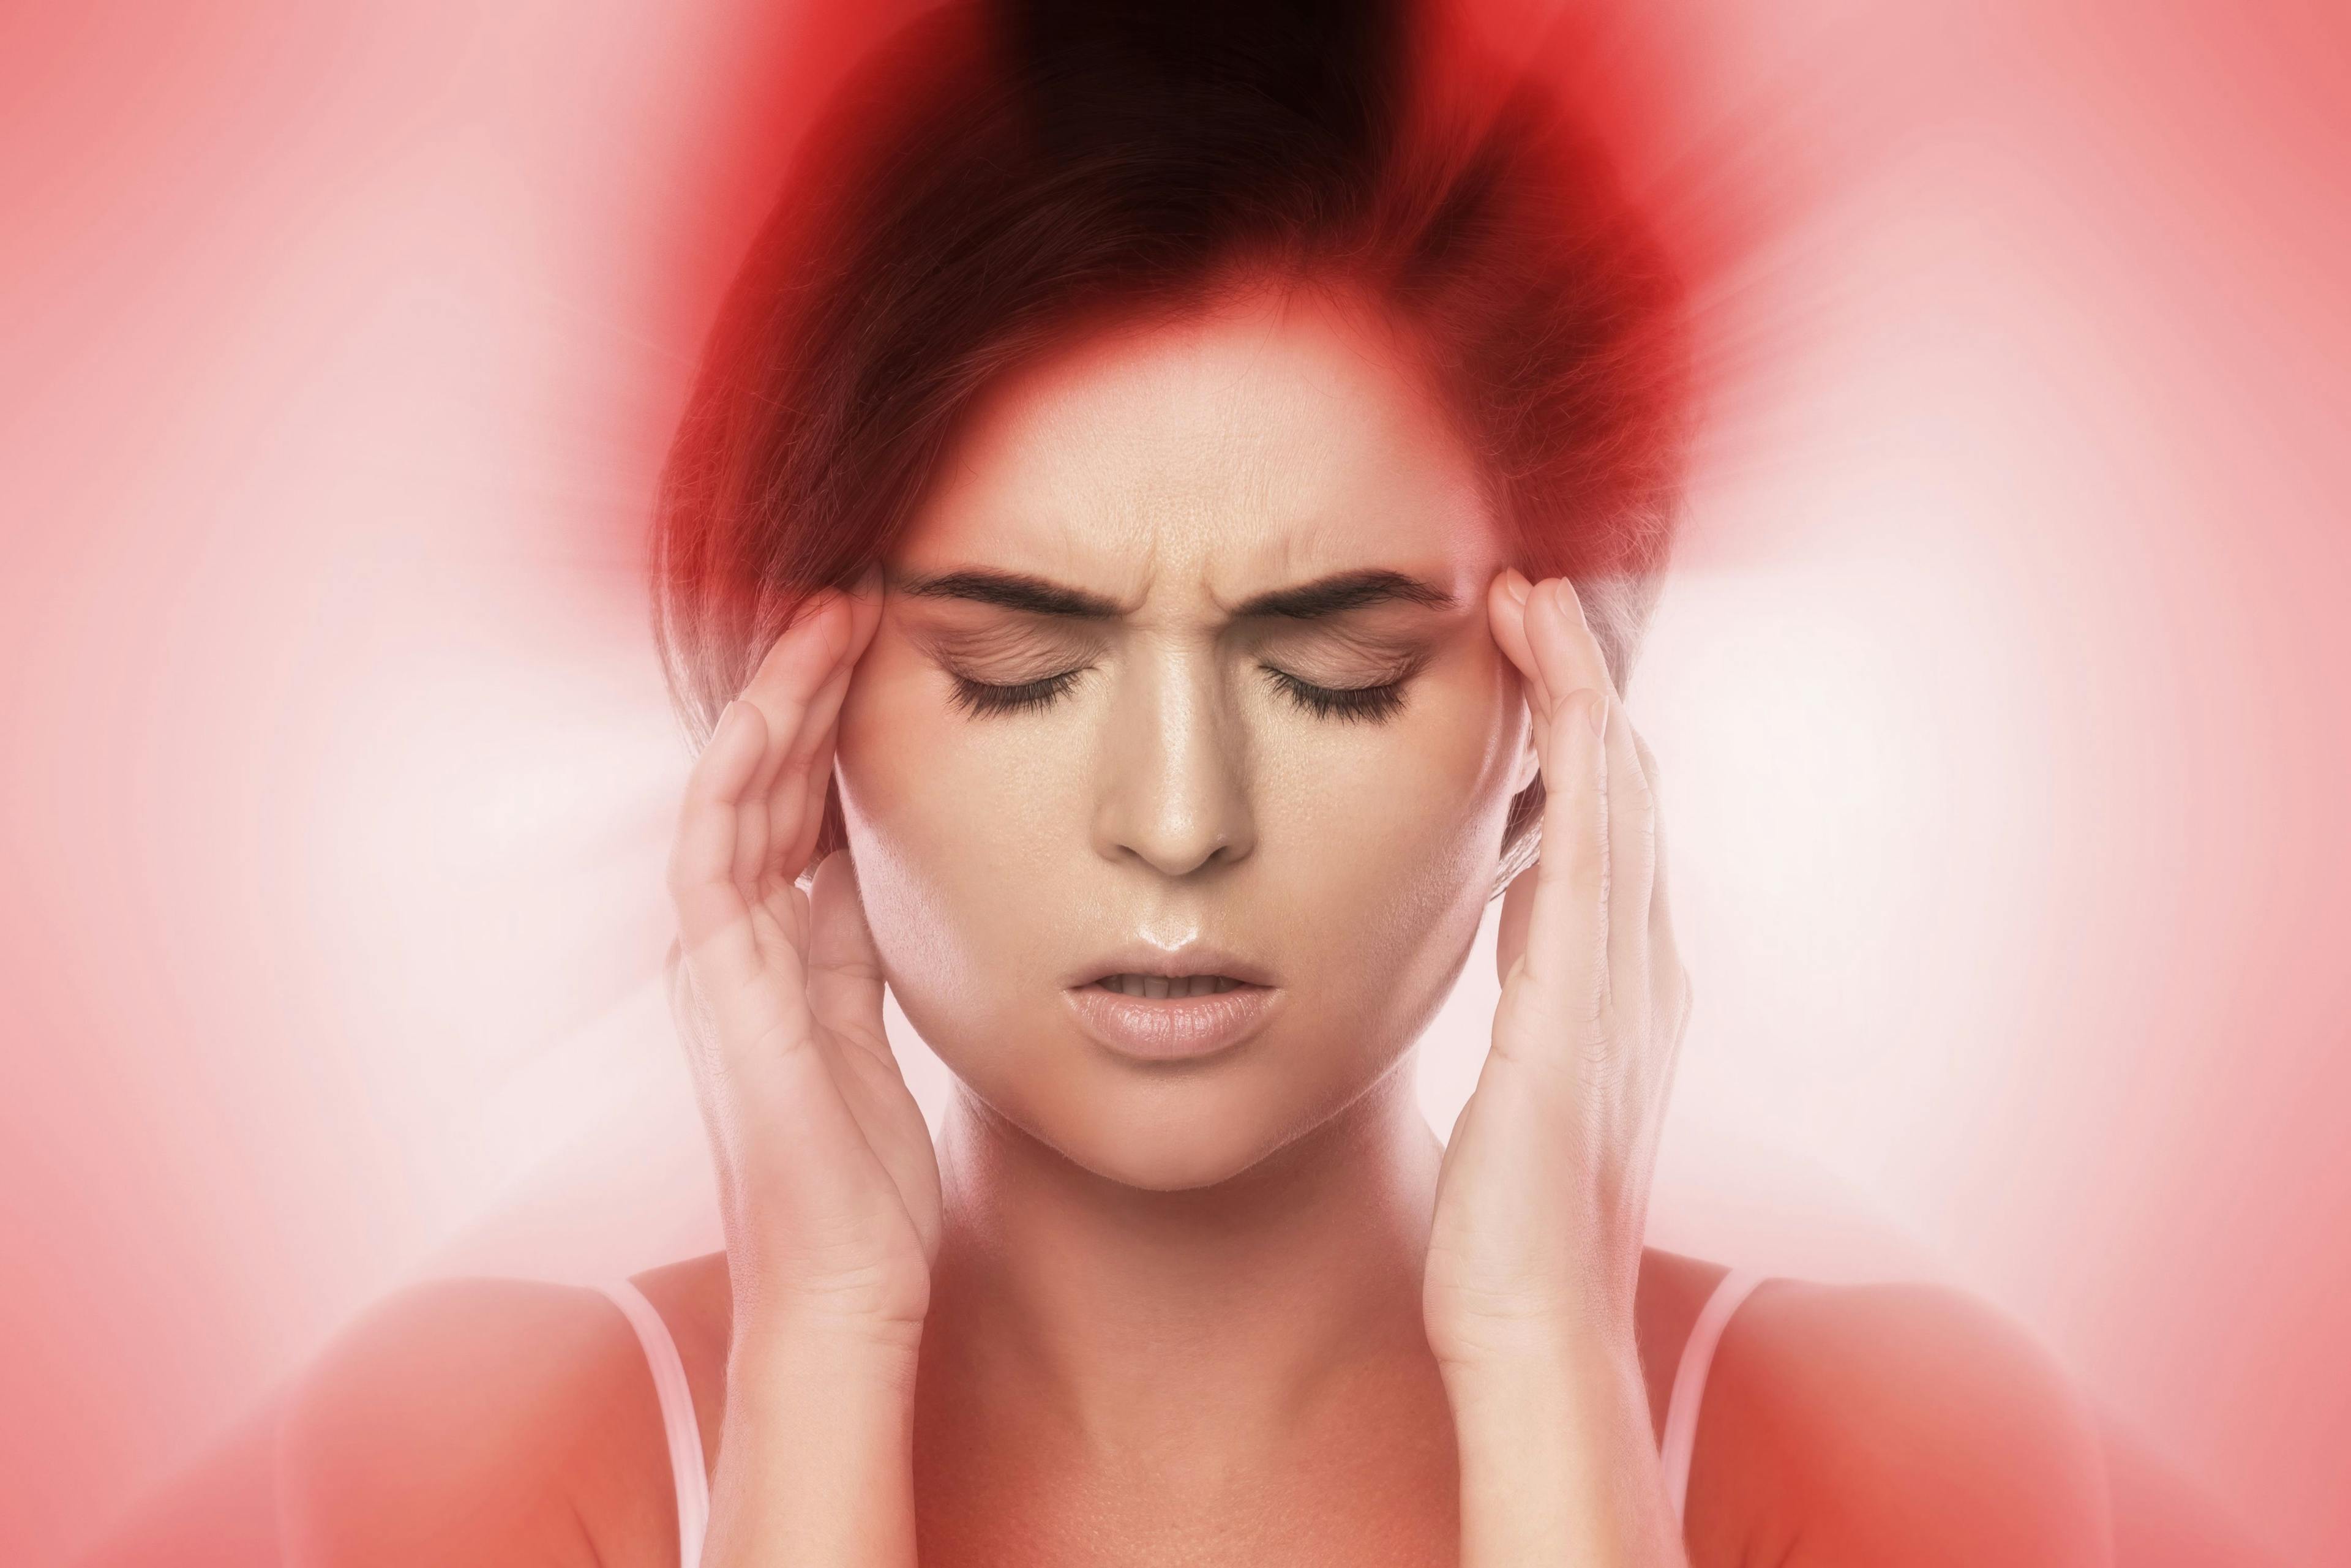 Managing Migraine, Part 1: Reducing Migraine Frequency Through Non-Prescription Measures 